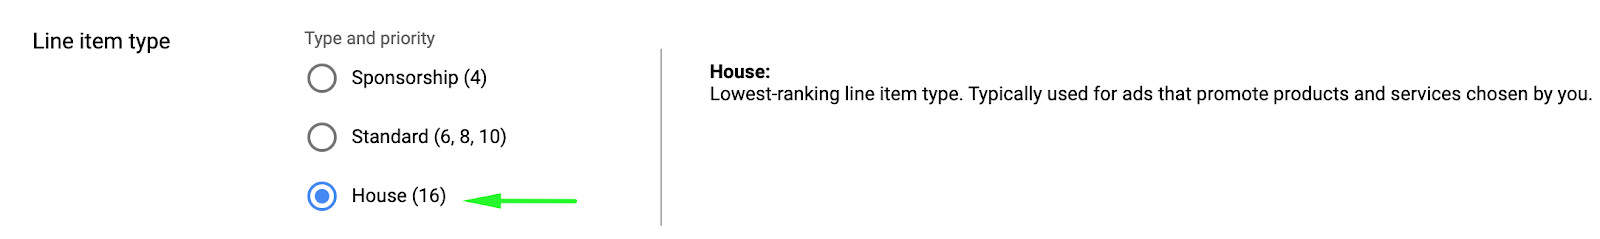 house line items